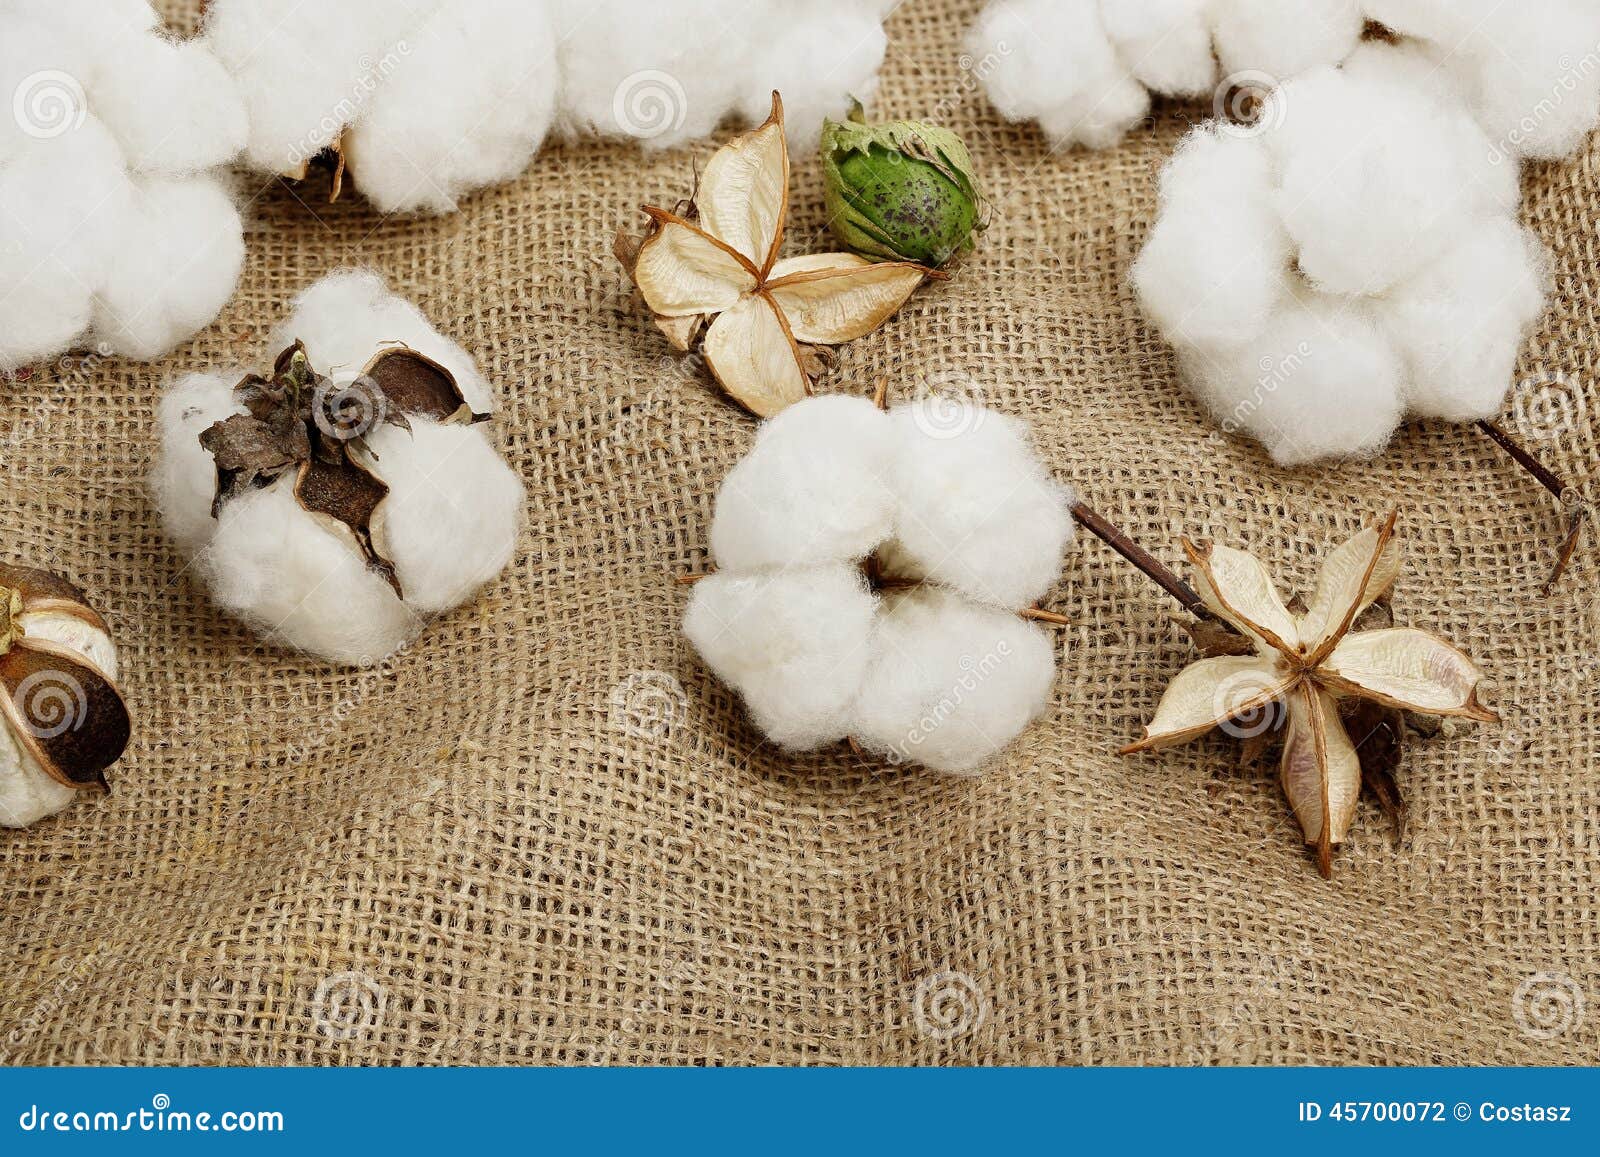 119+ Thousand Cotton Balls Royalty-Free Images, Stock Photos